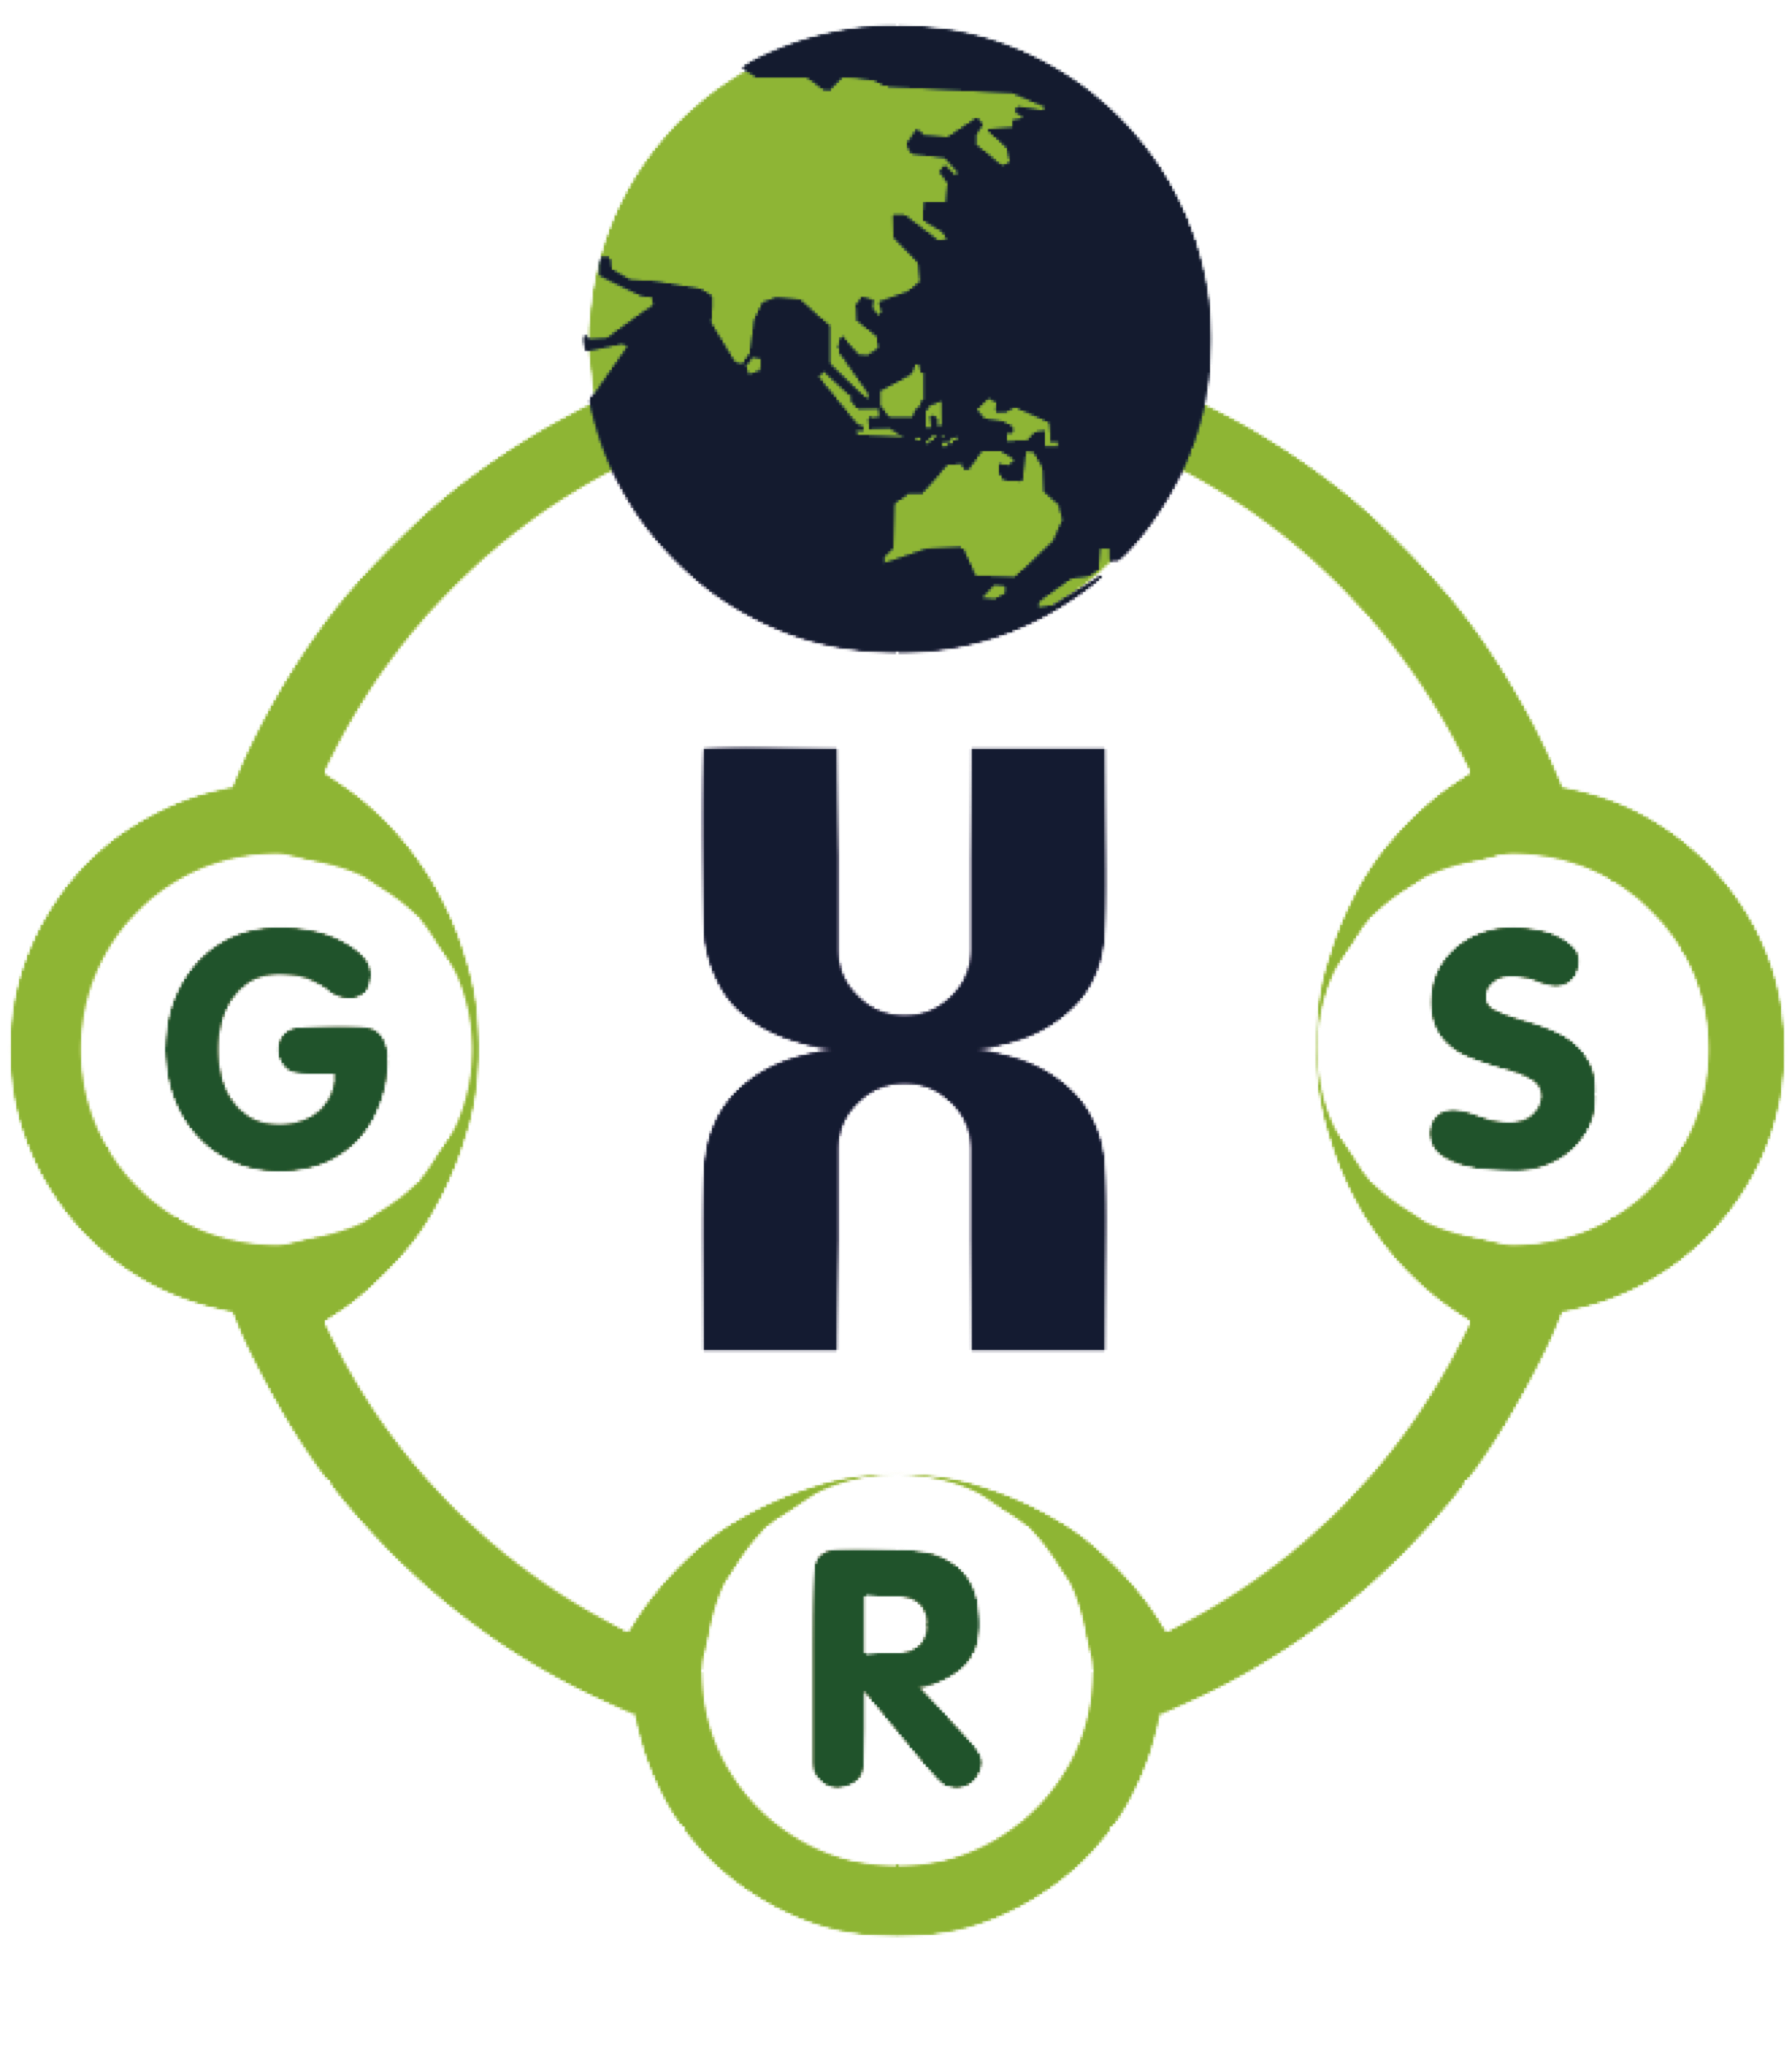 The logo for OpenXGR.